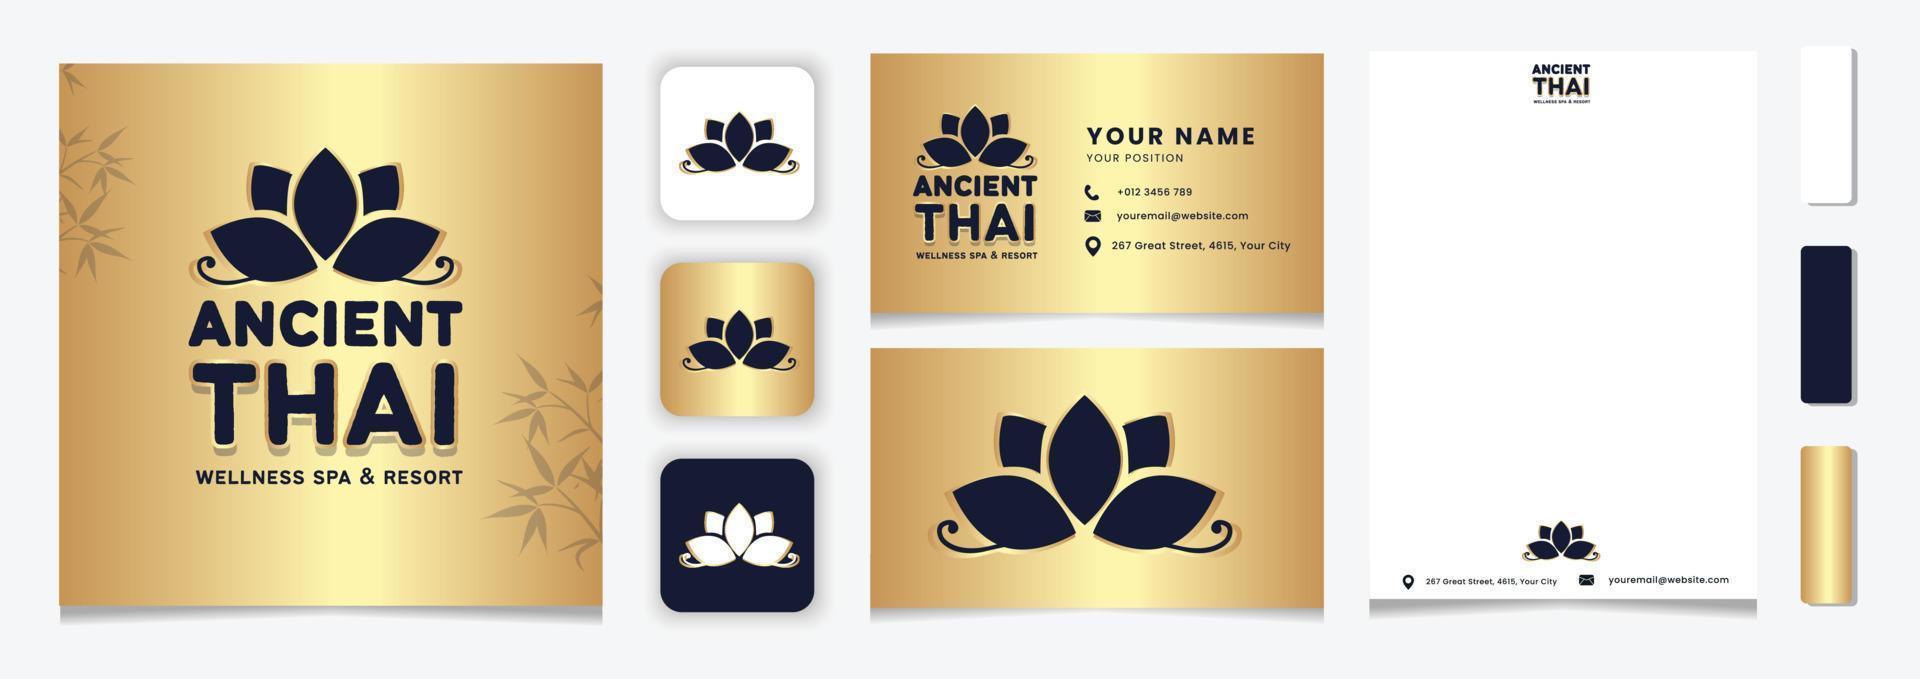 Thai Massage Spa logo and brand identity set free vector template